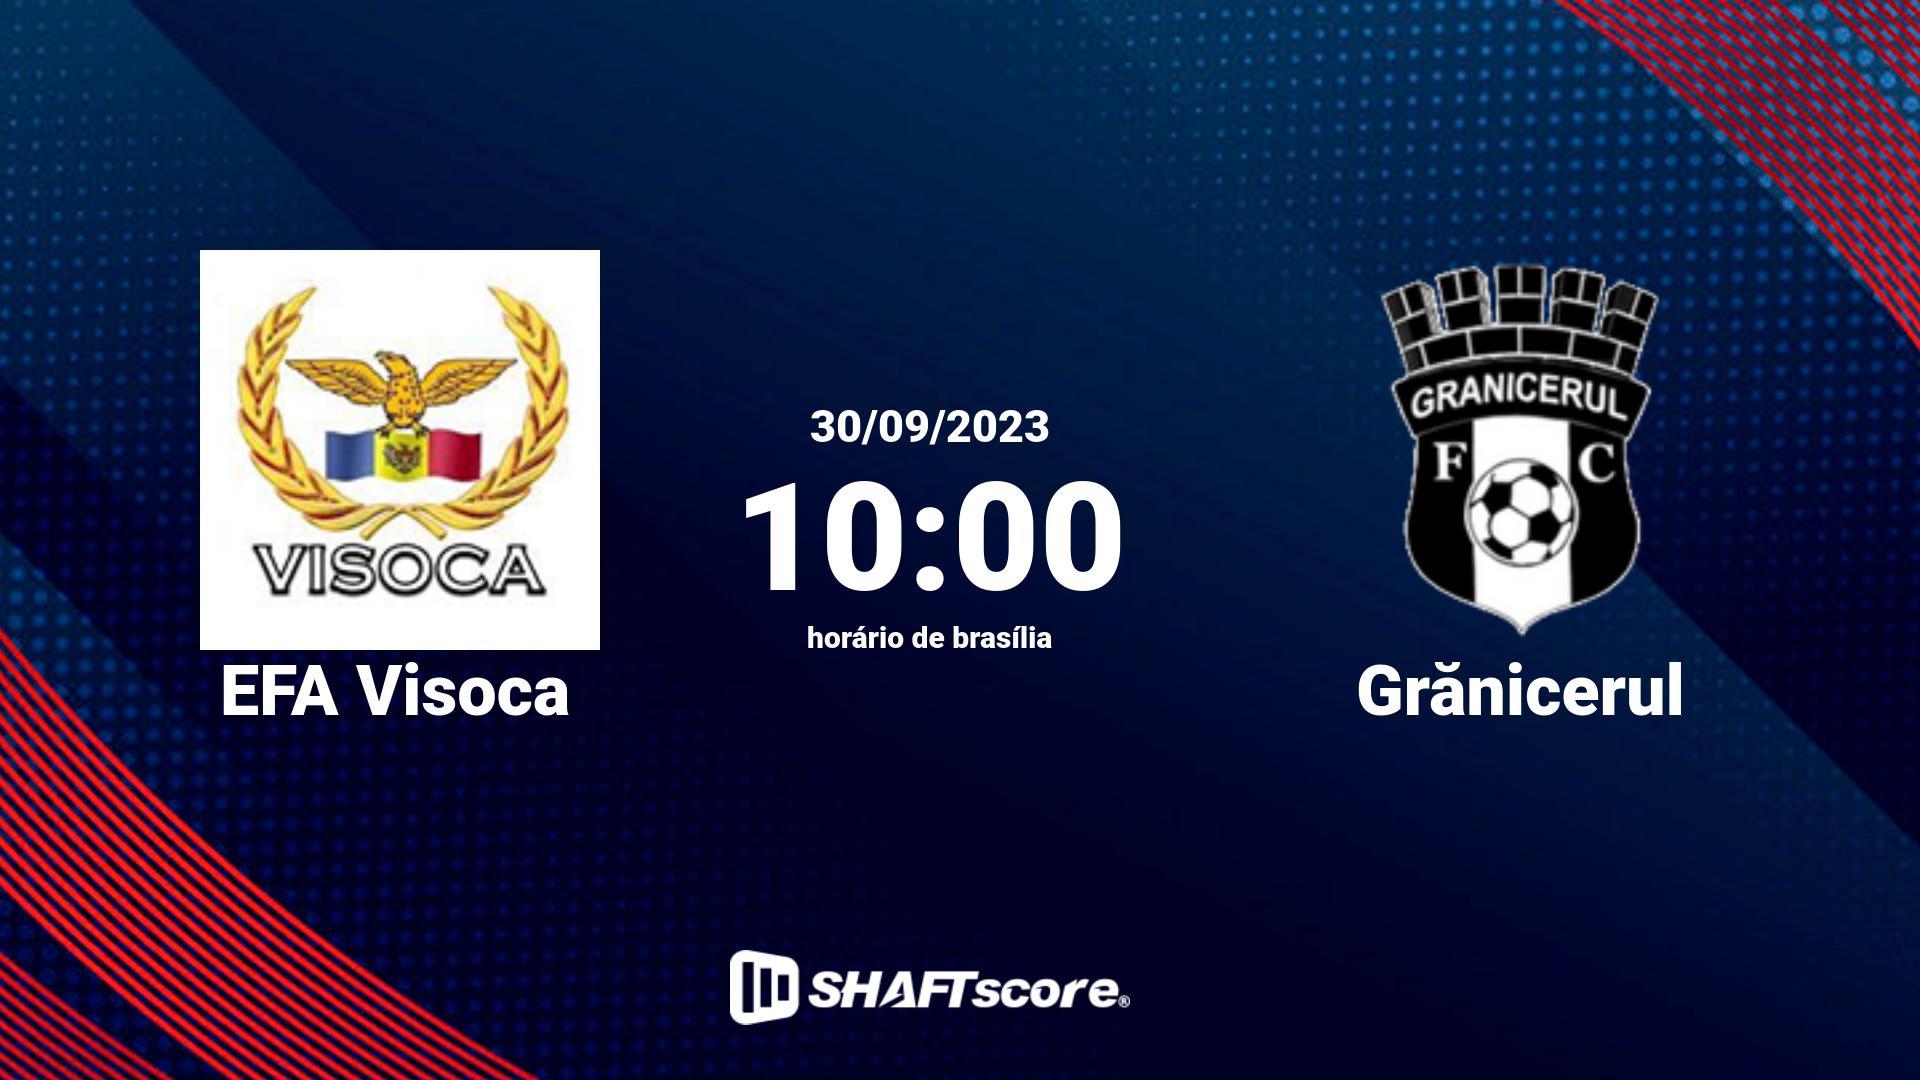 Estatísticas do jogo EFA Visoca vs Grănicerul 30.09 10:00